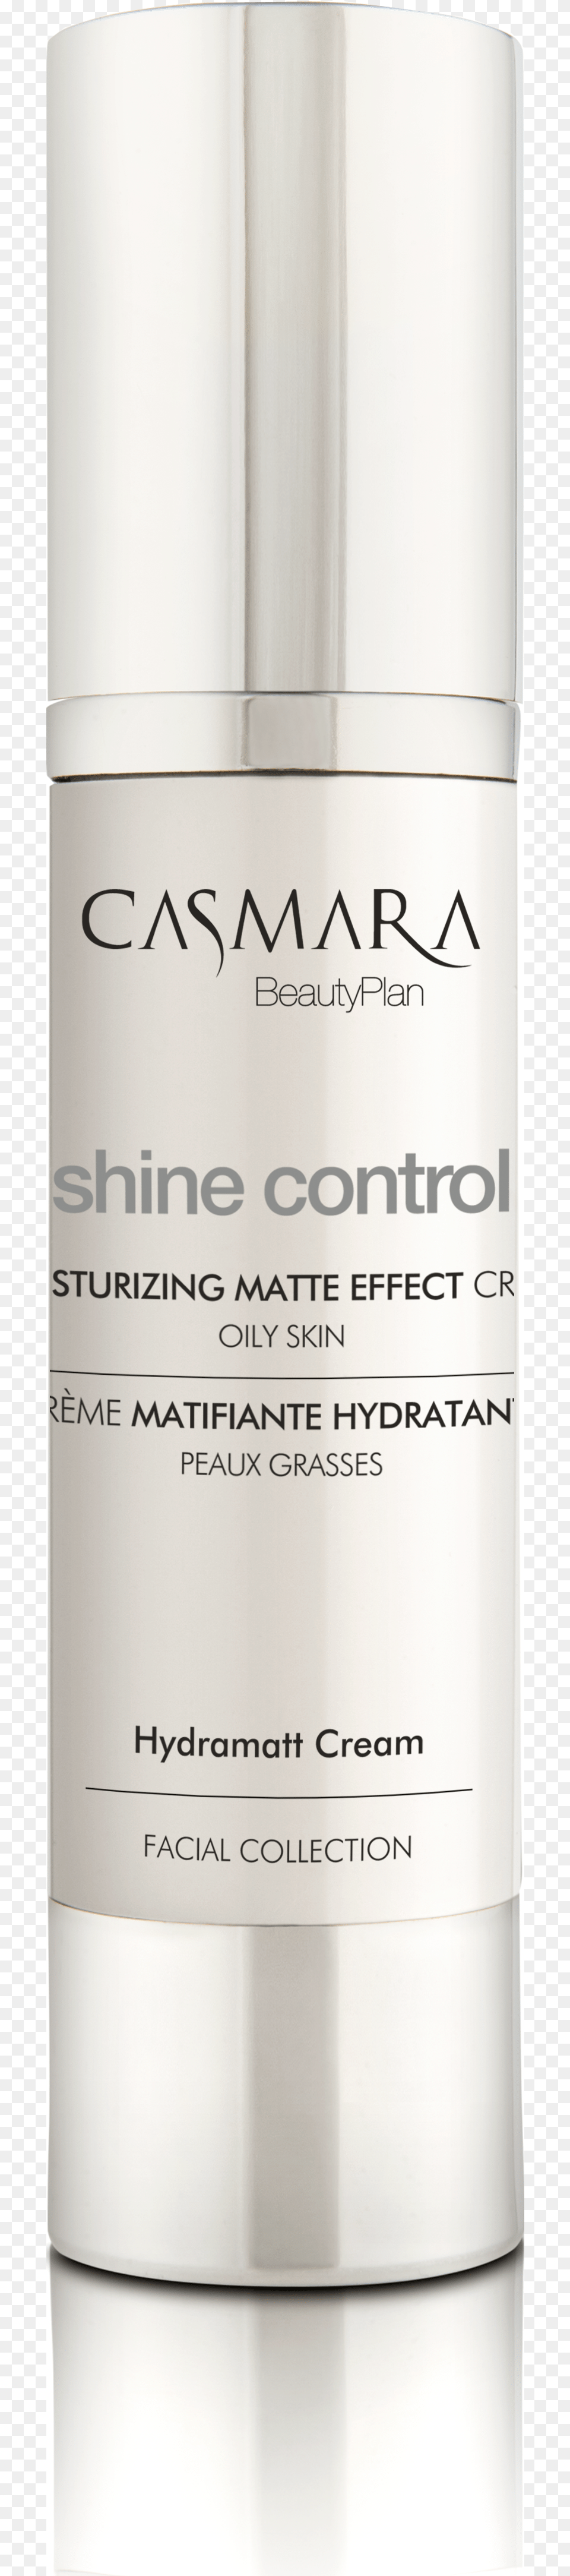 Shine Stop Price Of Casmara Shine Control Moisturizing, Cosmetics, Bottle Png Image